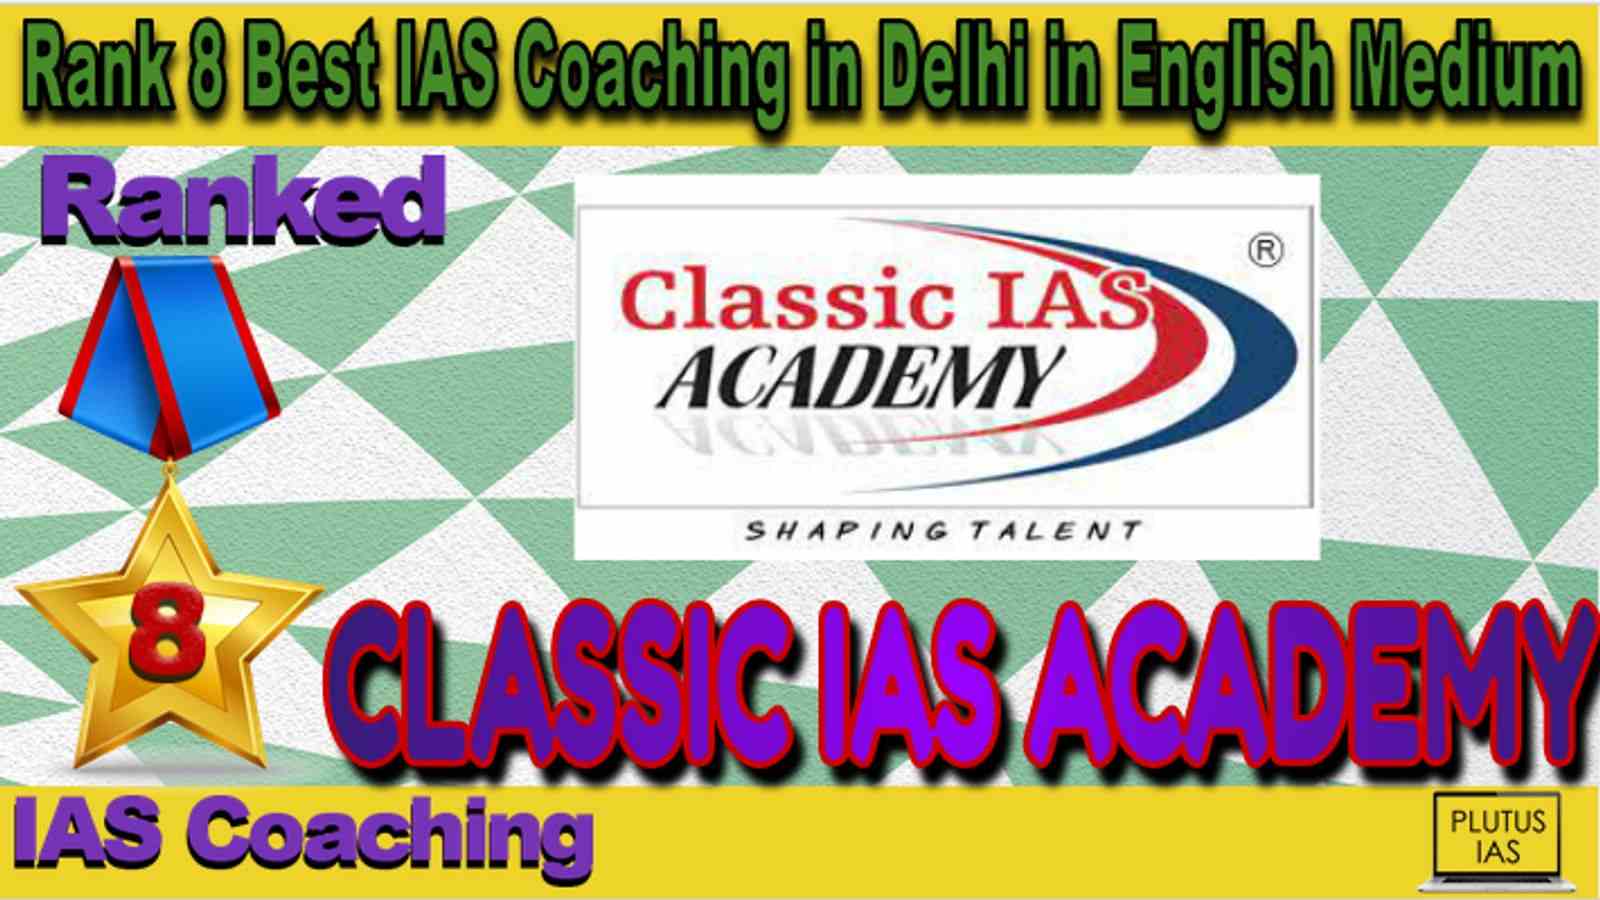 Rank 8 Best IAS Coaching in Delhi in English Medium